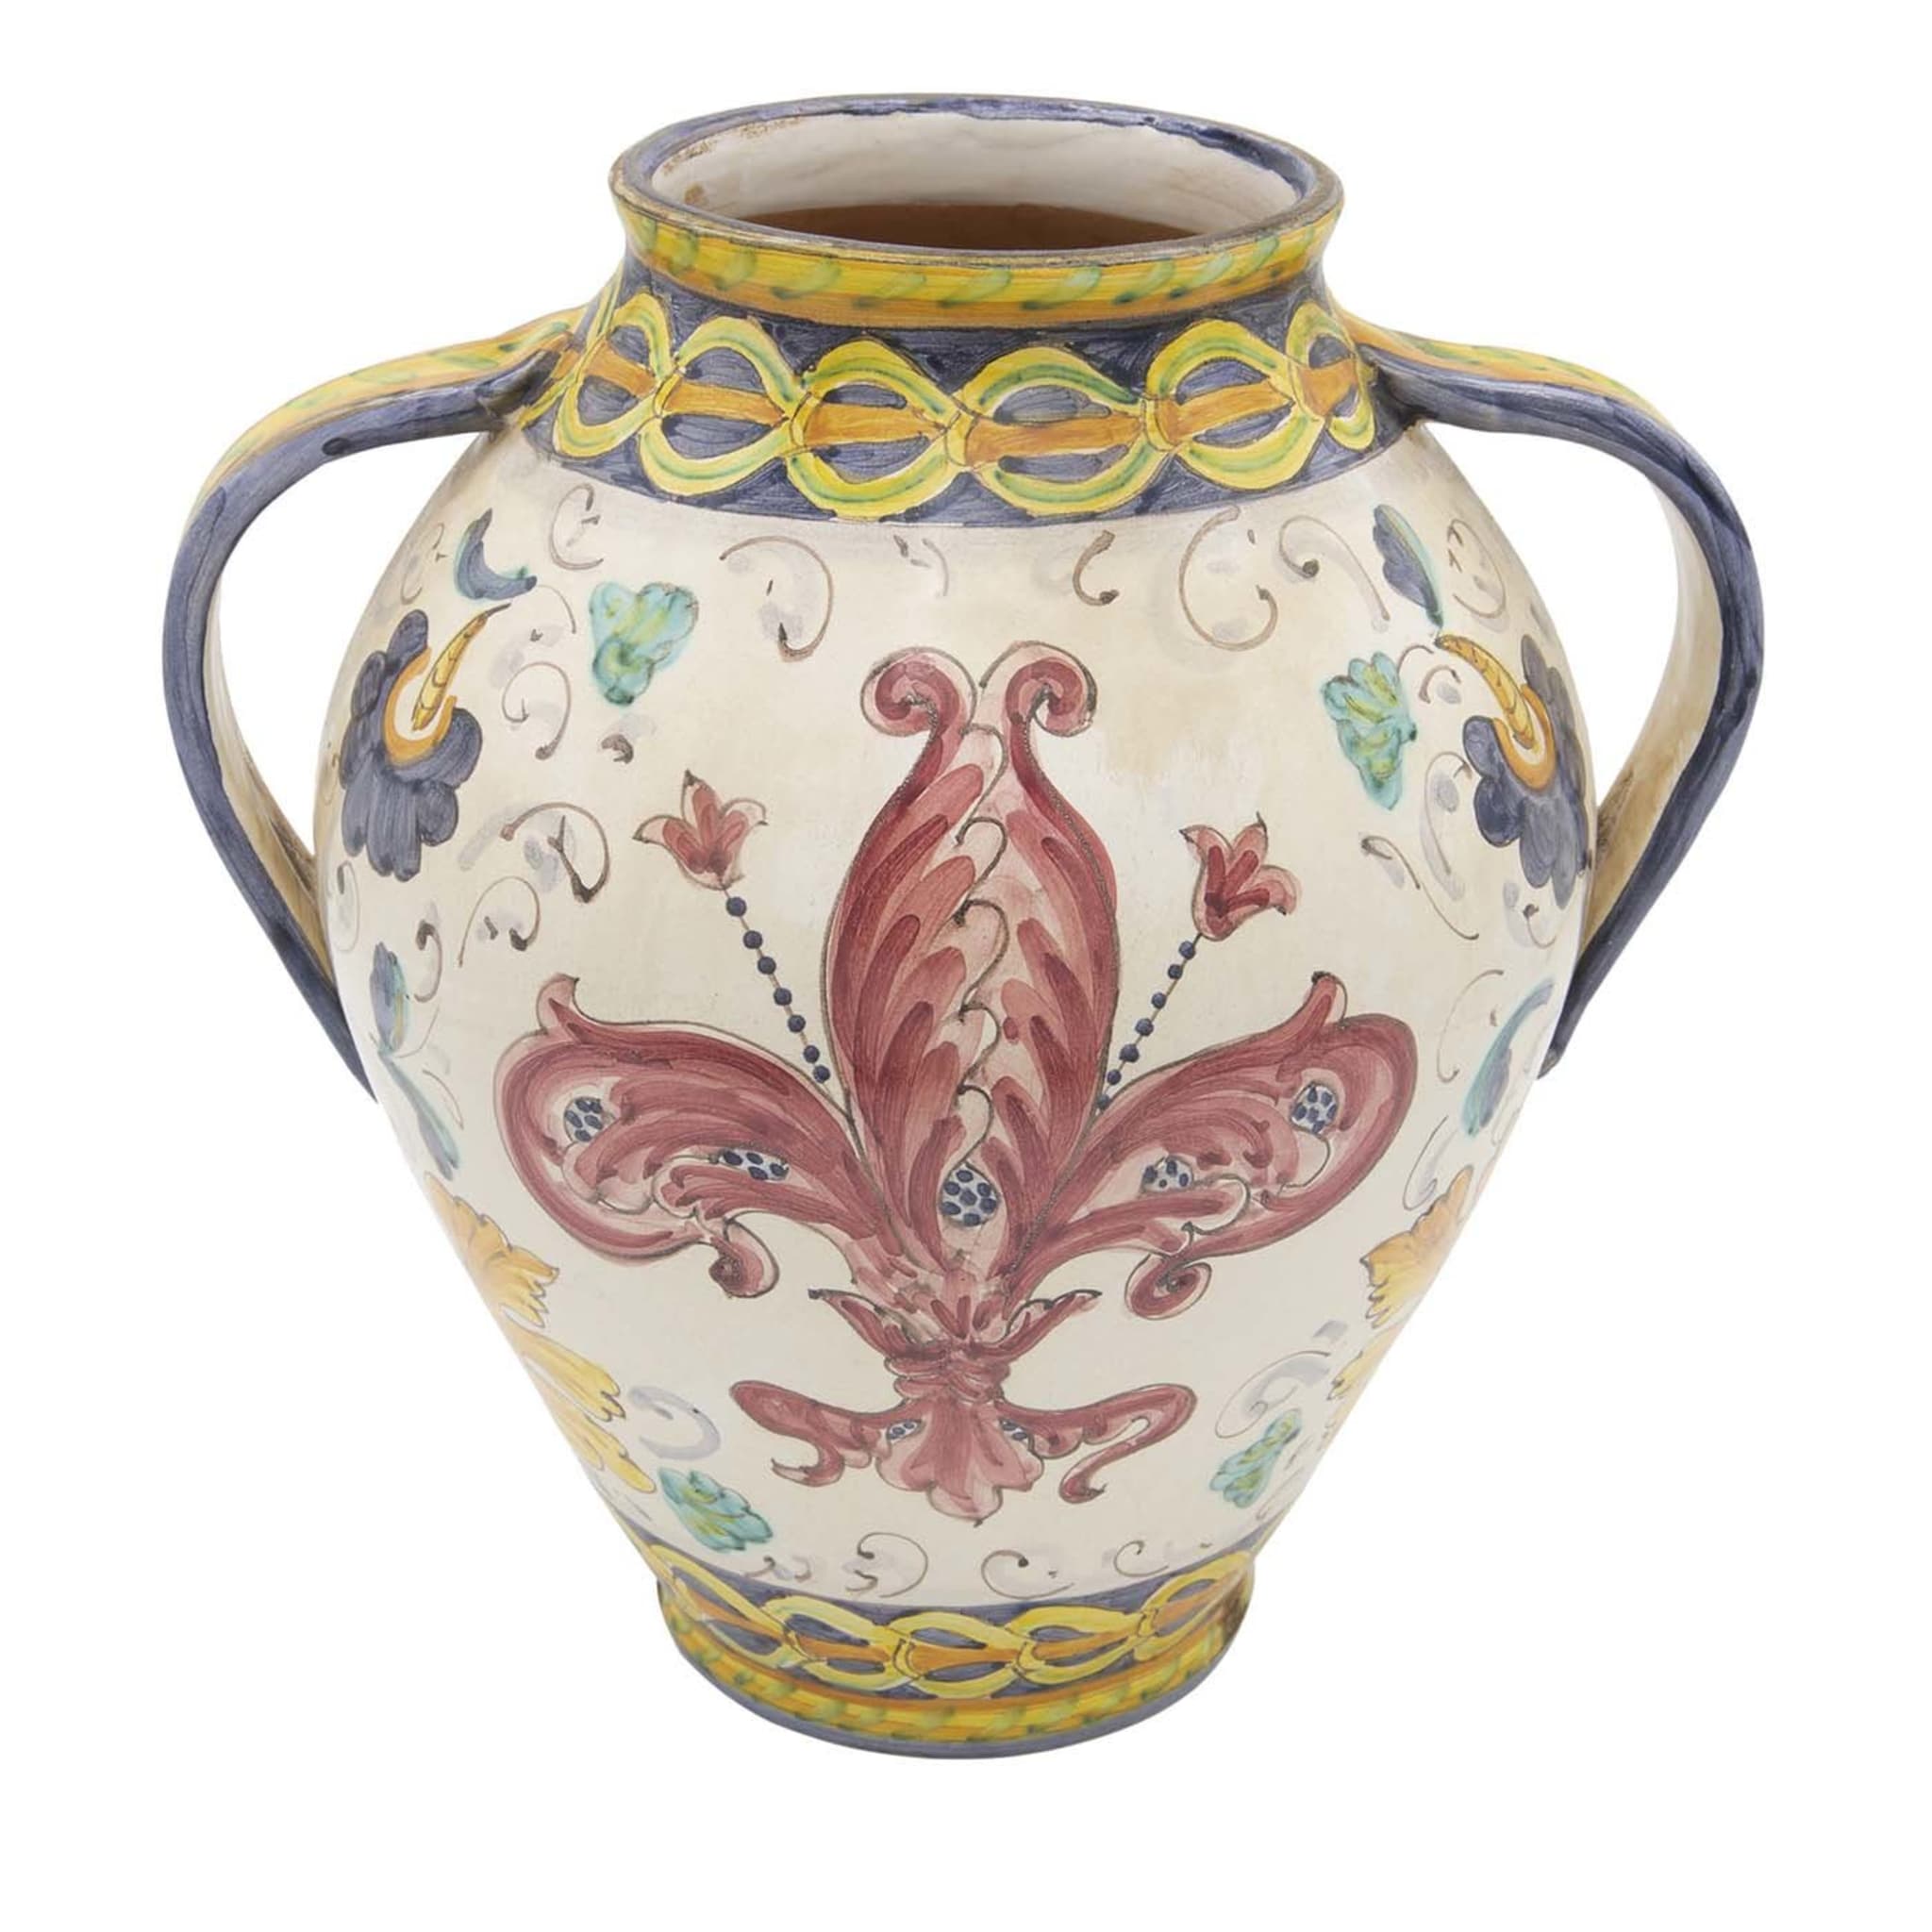 Orciolo-Vase mit roter Florentinerblume (Fleur-de-Lis) - Hauptansicht